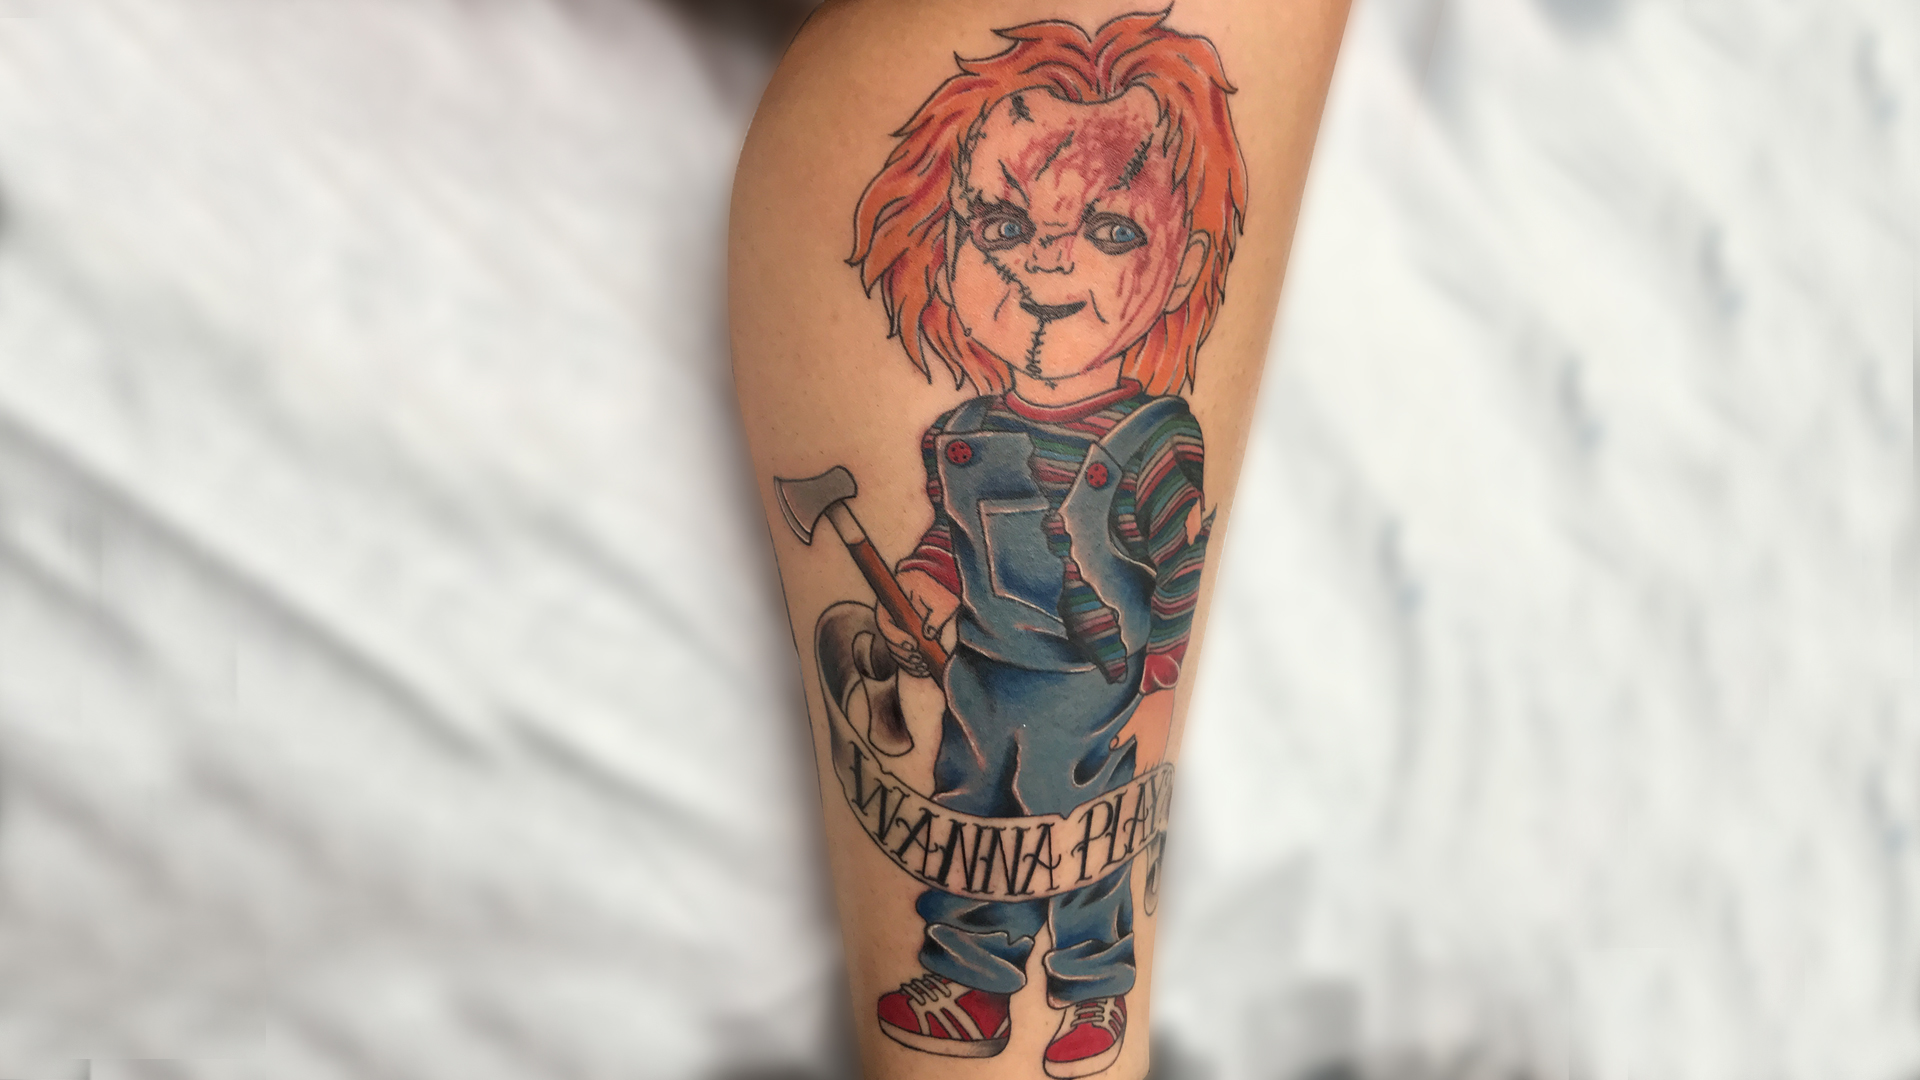 Q Tattoo in Huntington Beach - Sara Delara - Chucky wanna play?